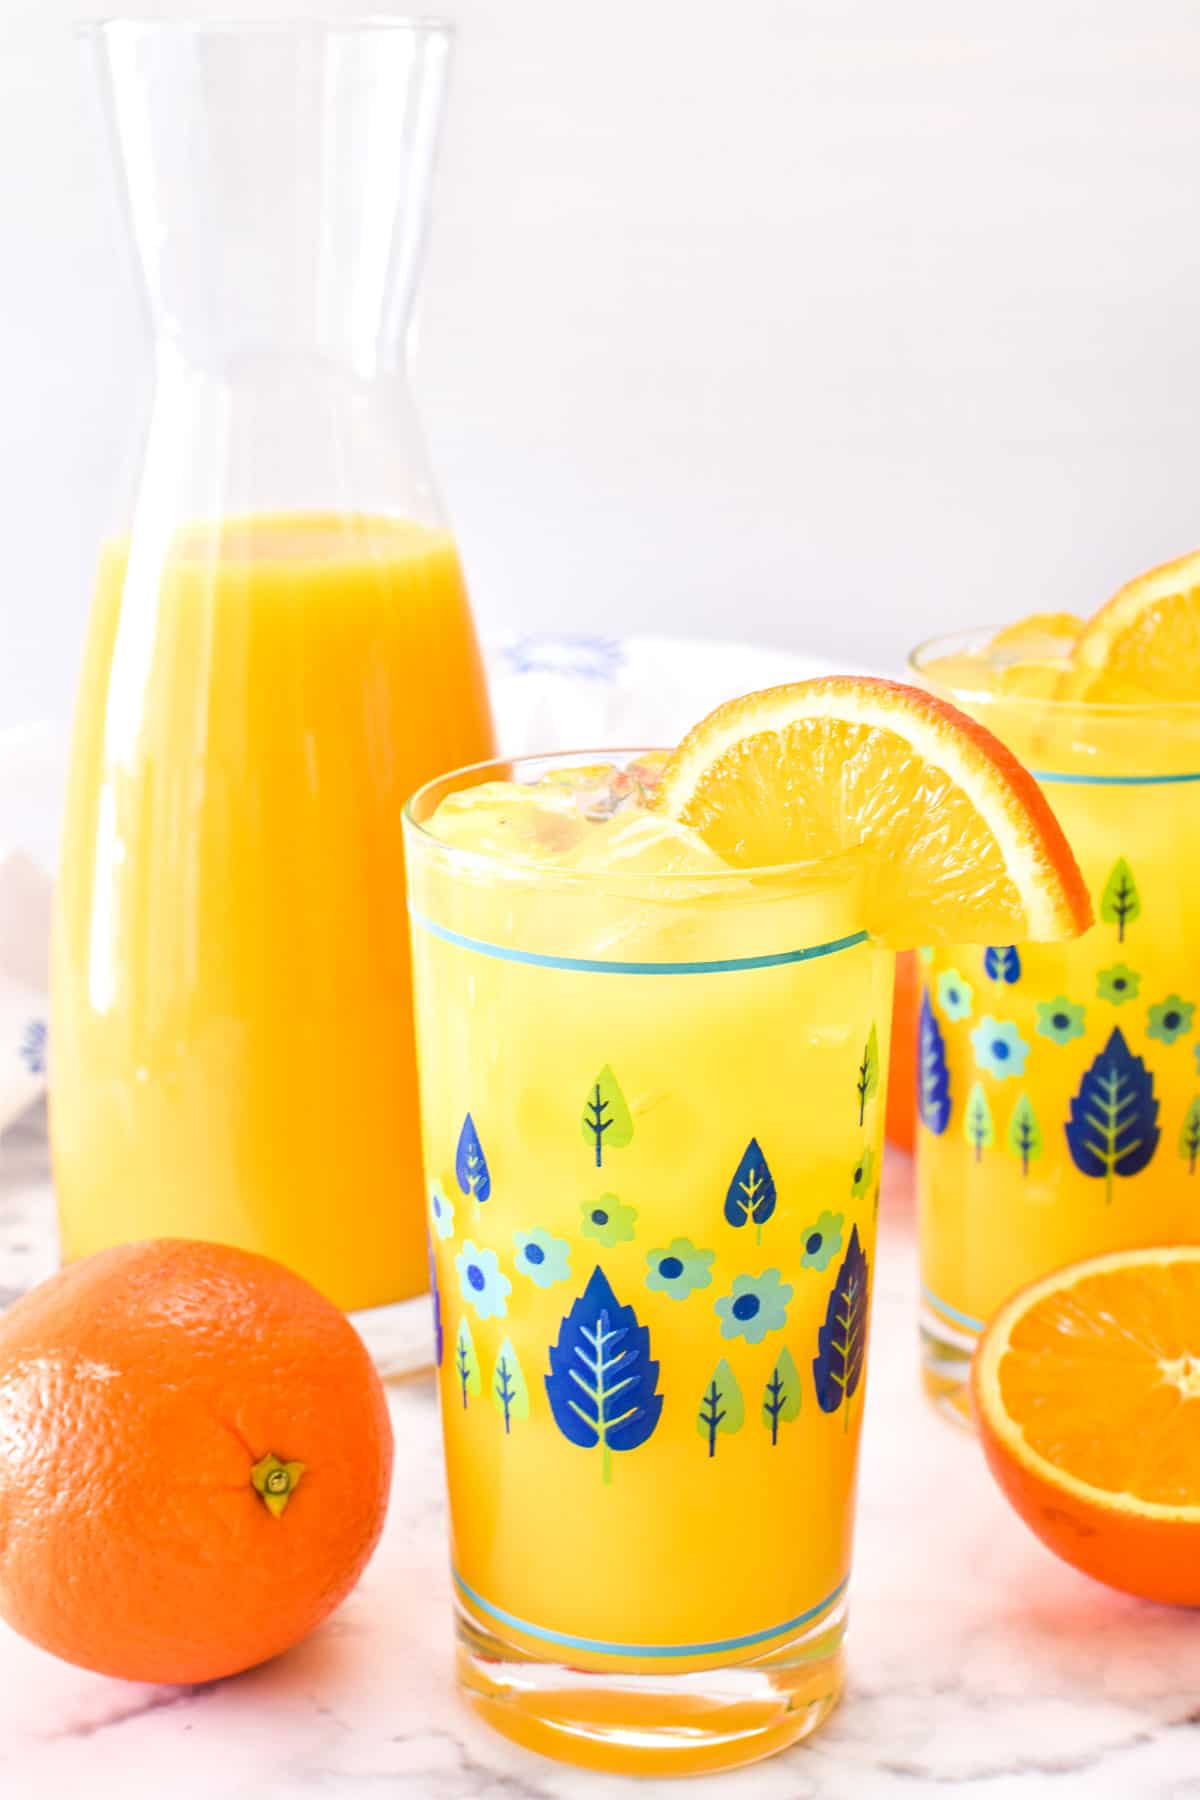 Screwdriver in a glass with orange juice in a carafe